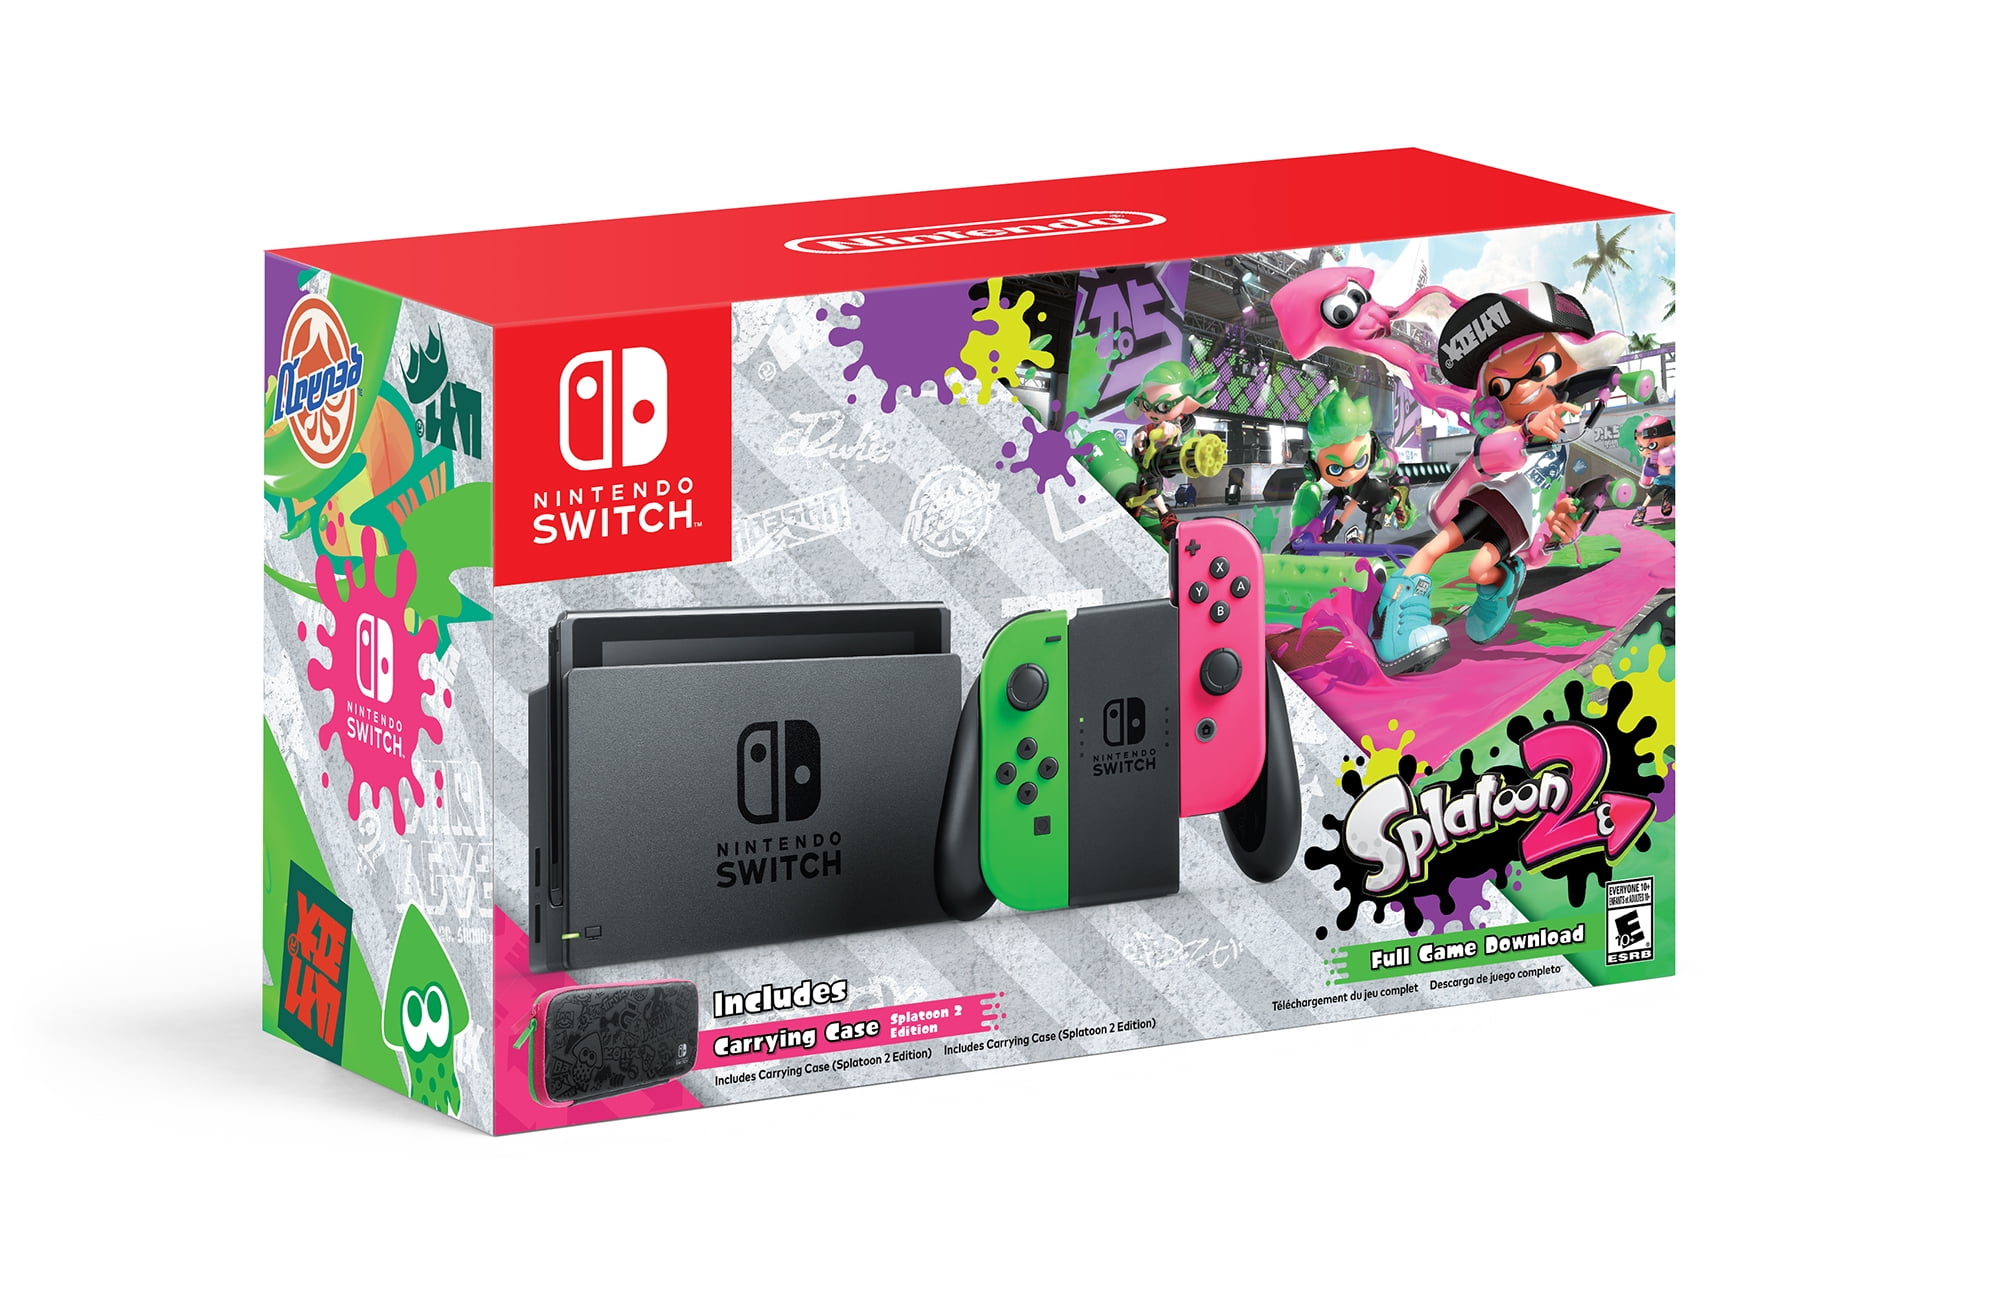 Nintendo Switch Hardware with 2 + Neon Green/Neon Joy-Cons (Nintendo Switch) Walmart.com